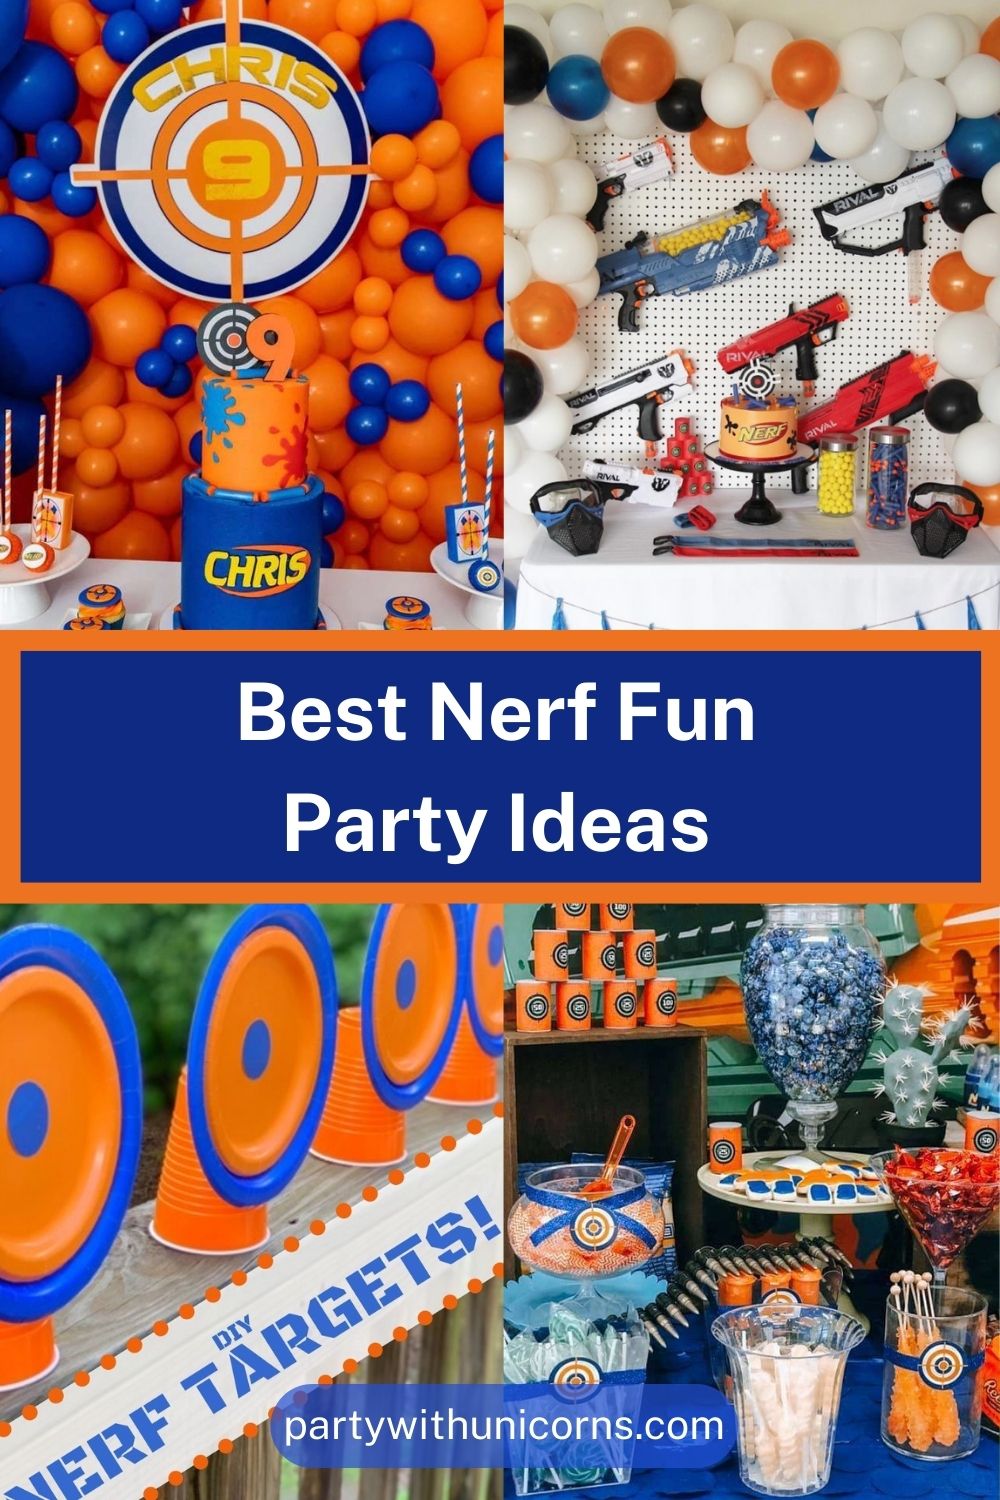 Nerf gun party ideas